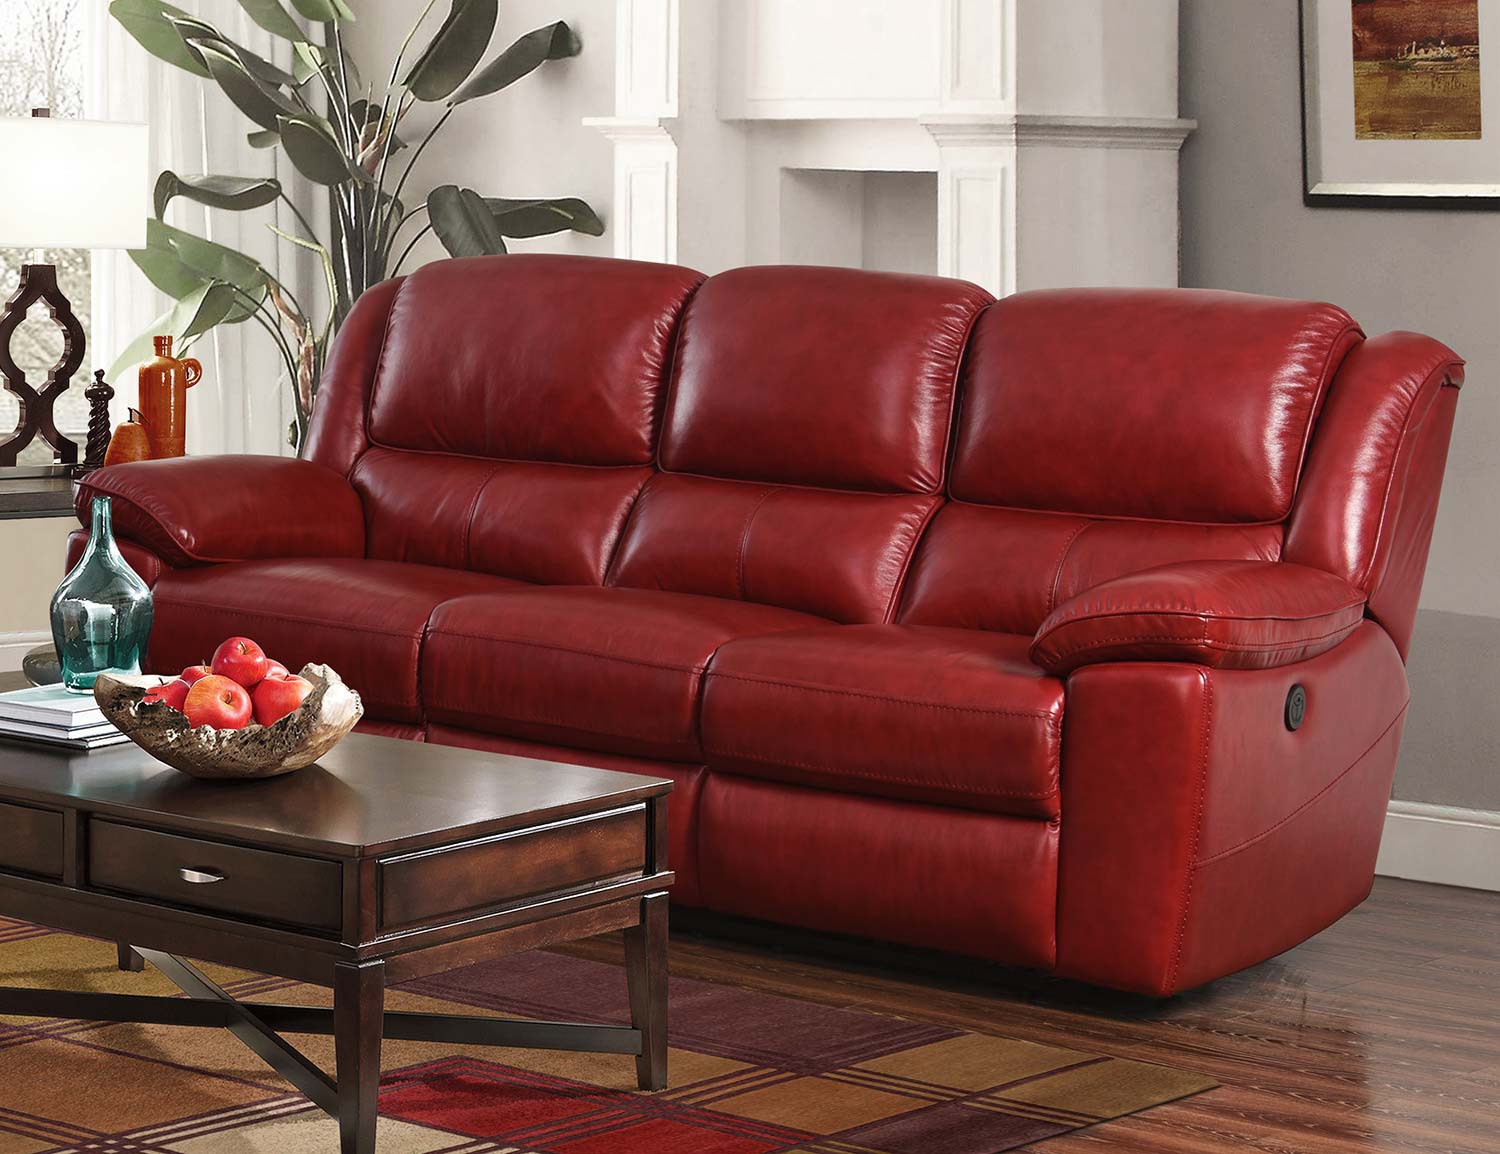 Barcalounger Laguna Power Reclining Sofa - Contact Red/Leather Match